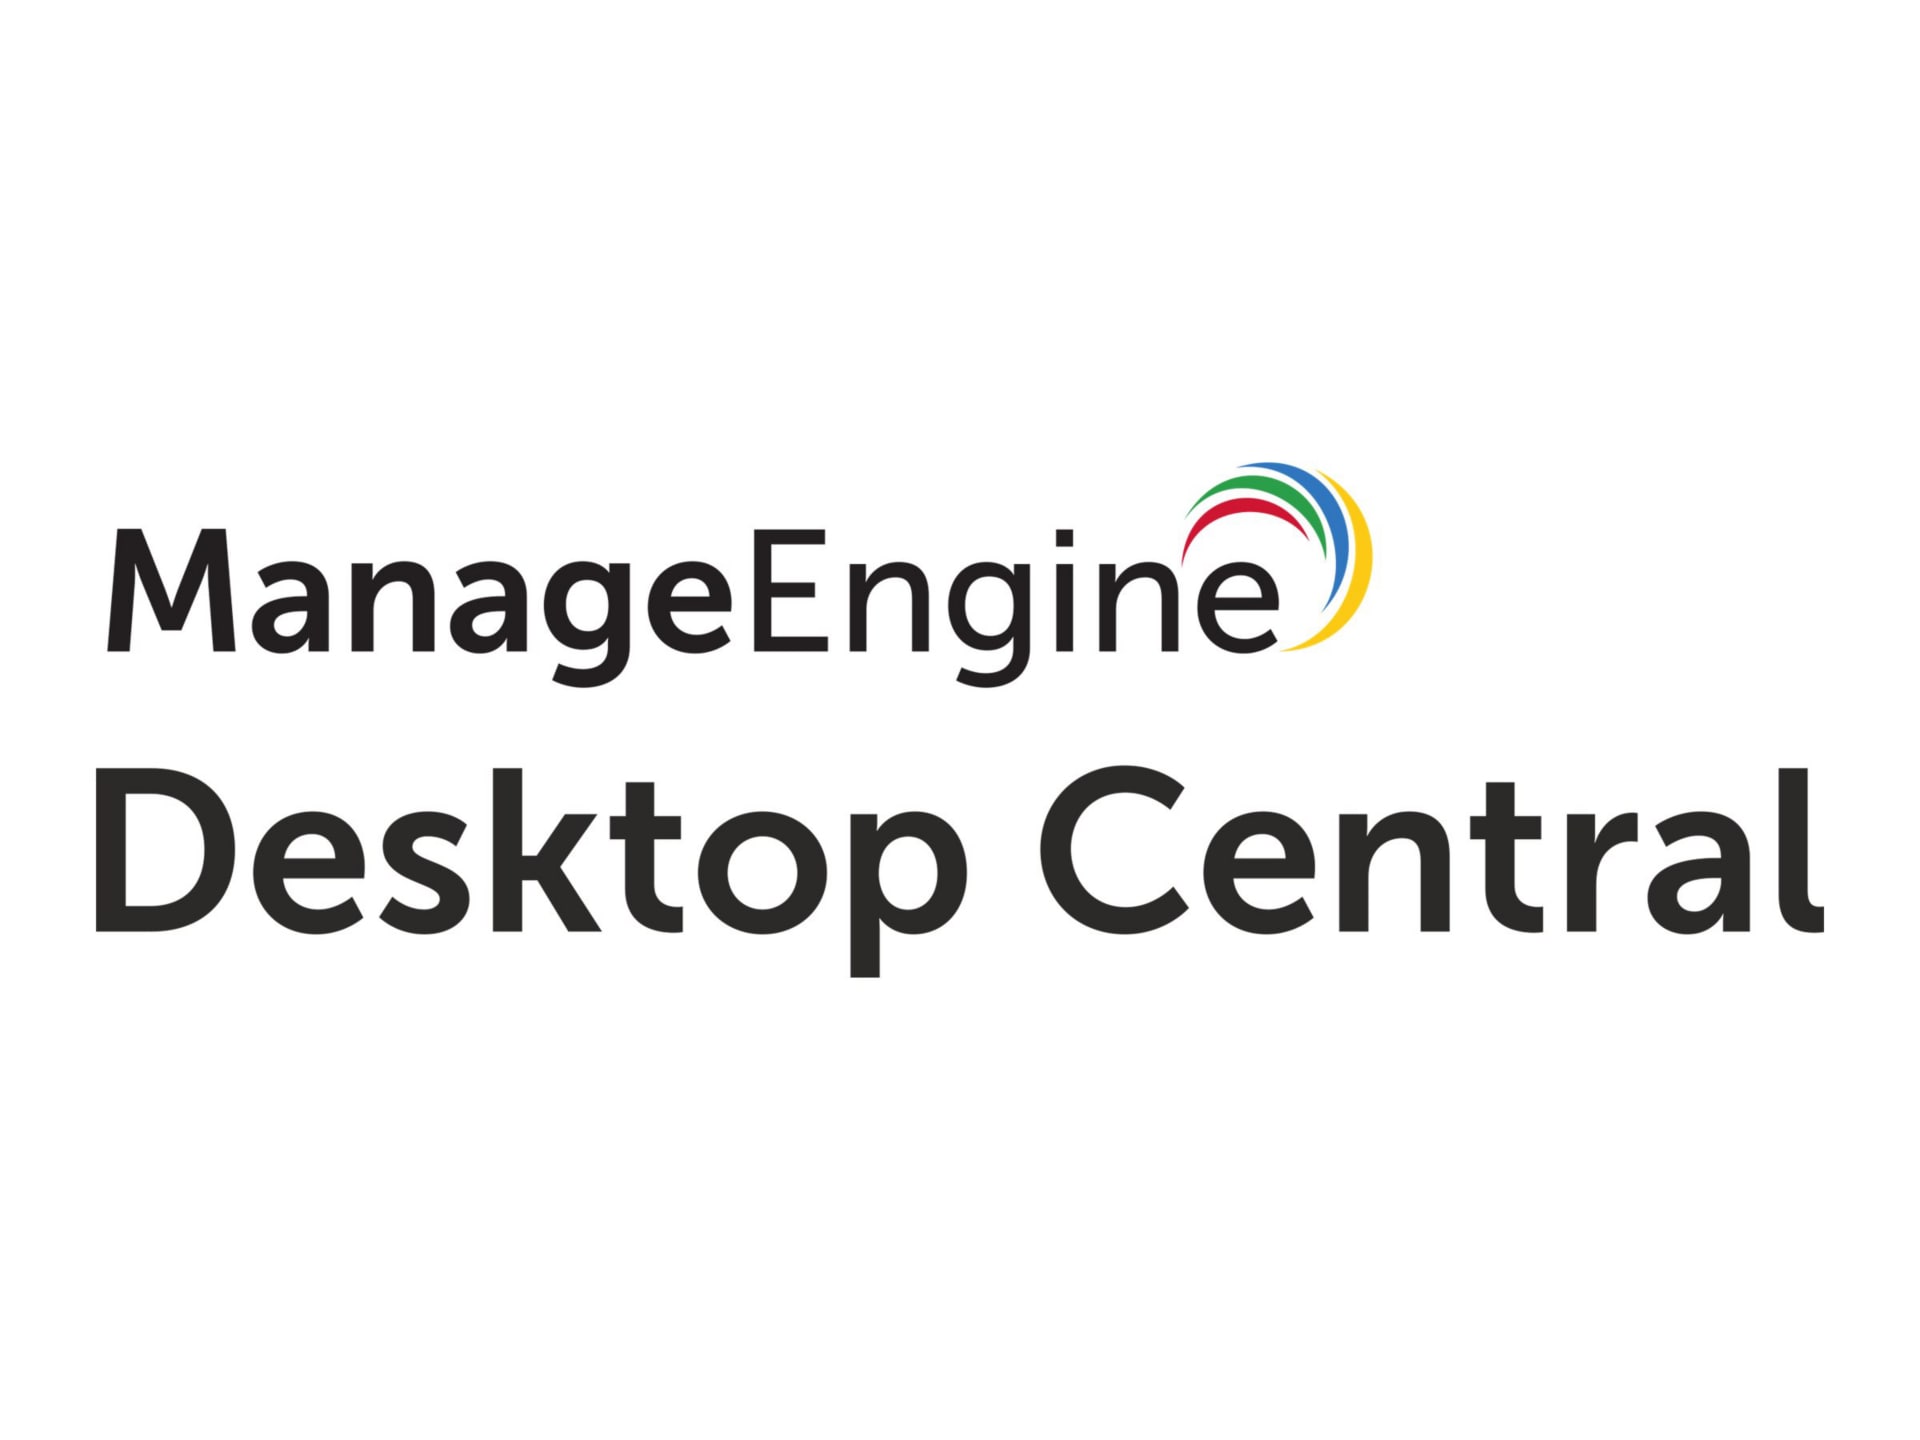 ManageEngine Desktop Central Cloud Enterprise Edition - subscription license (1 year) - 1 user, 250 computers